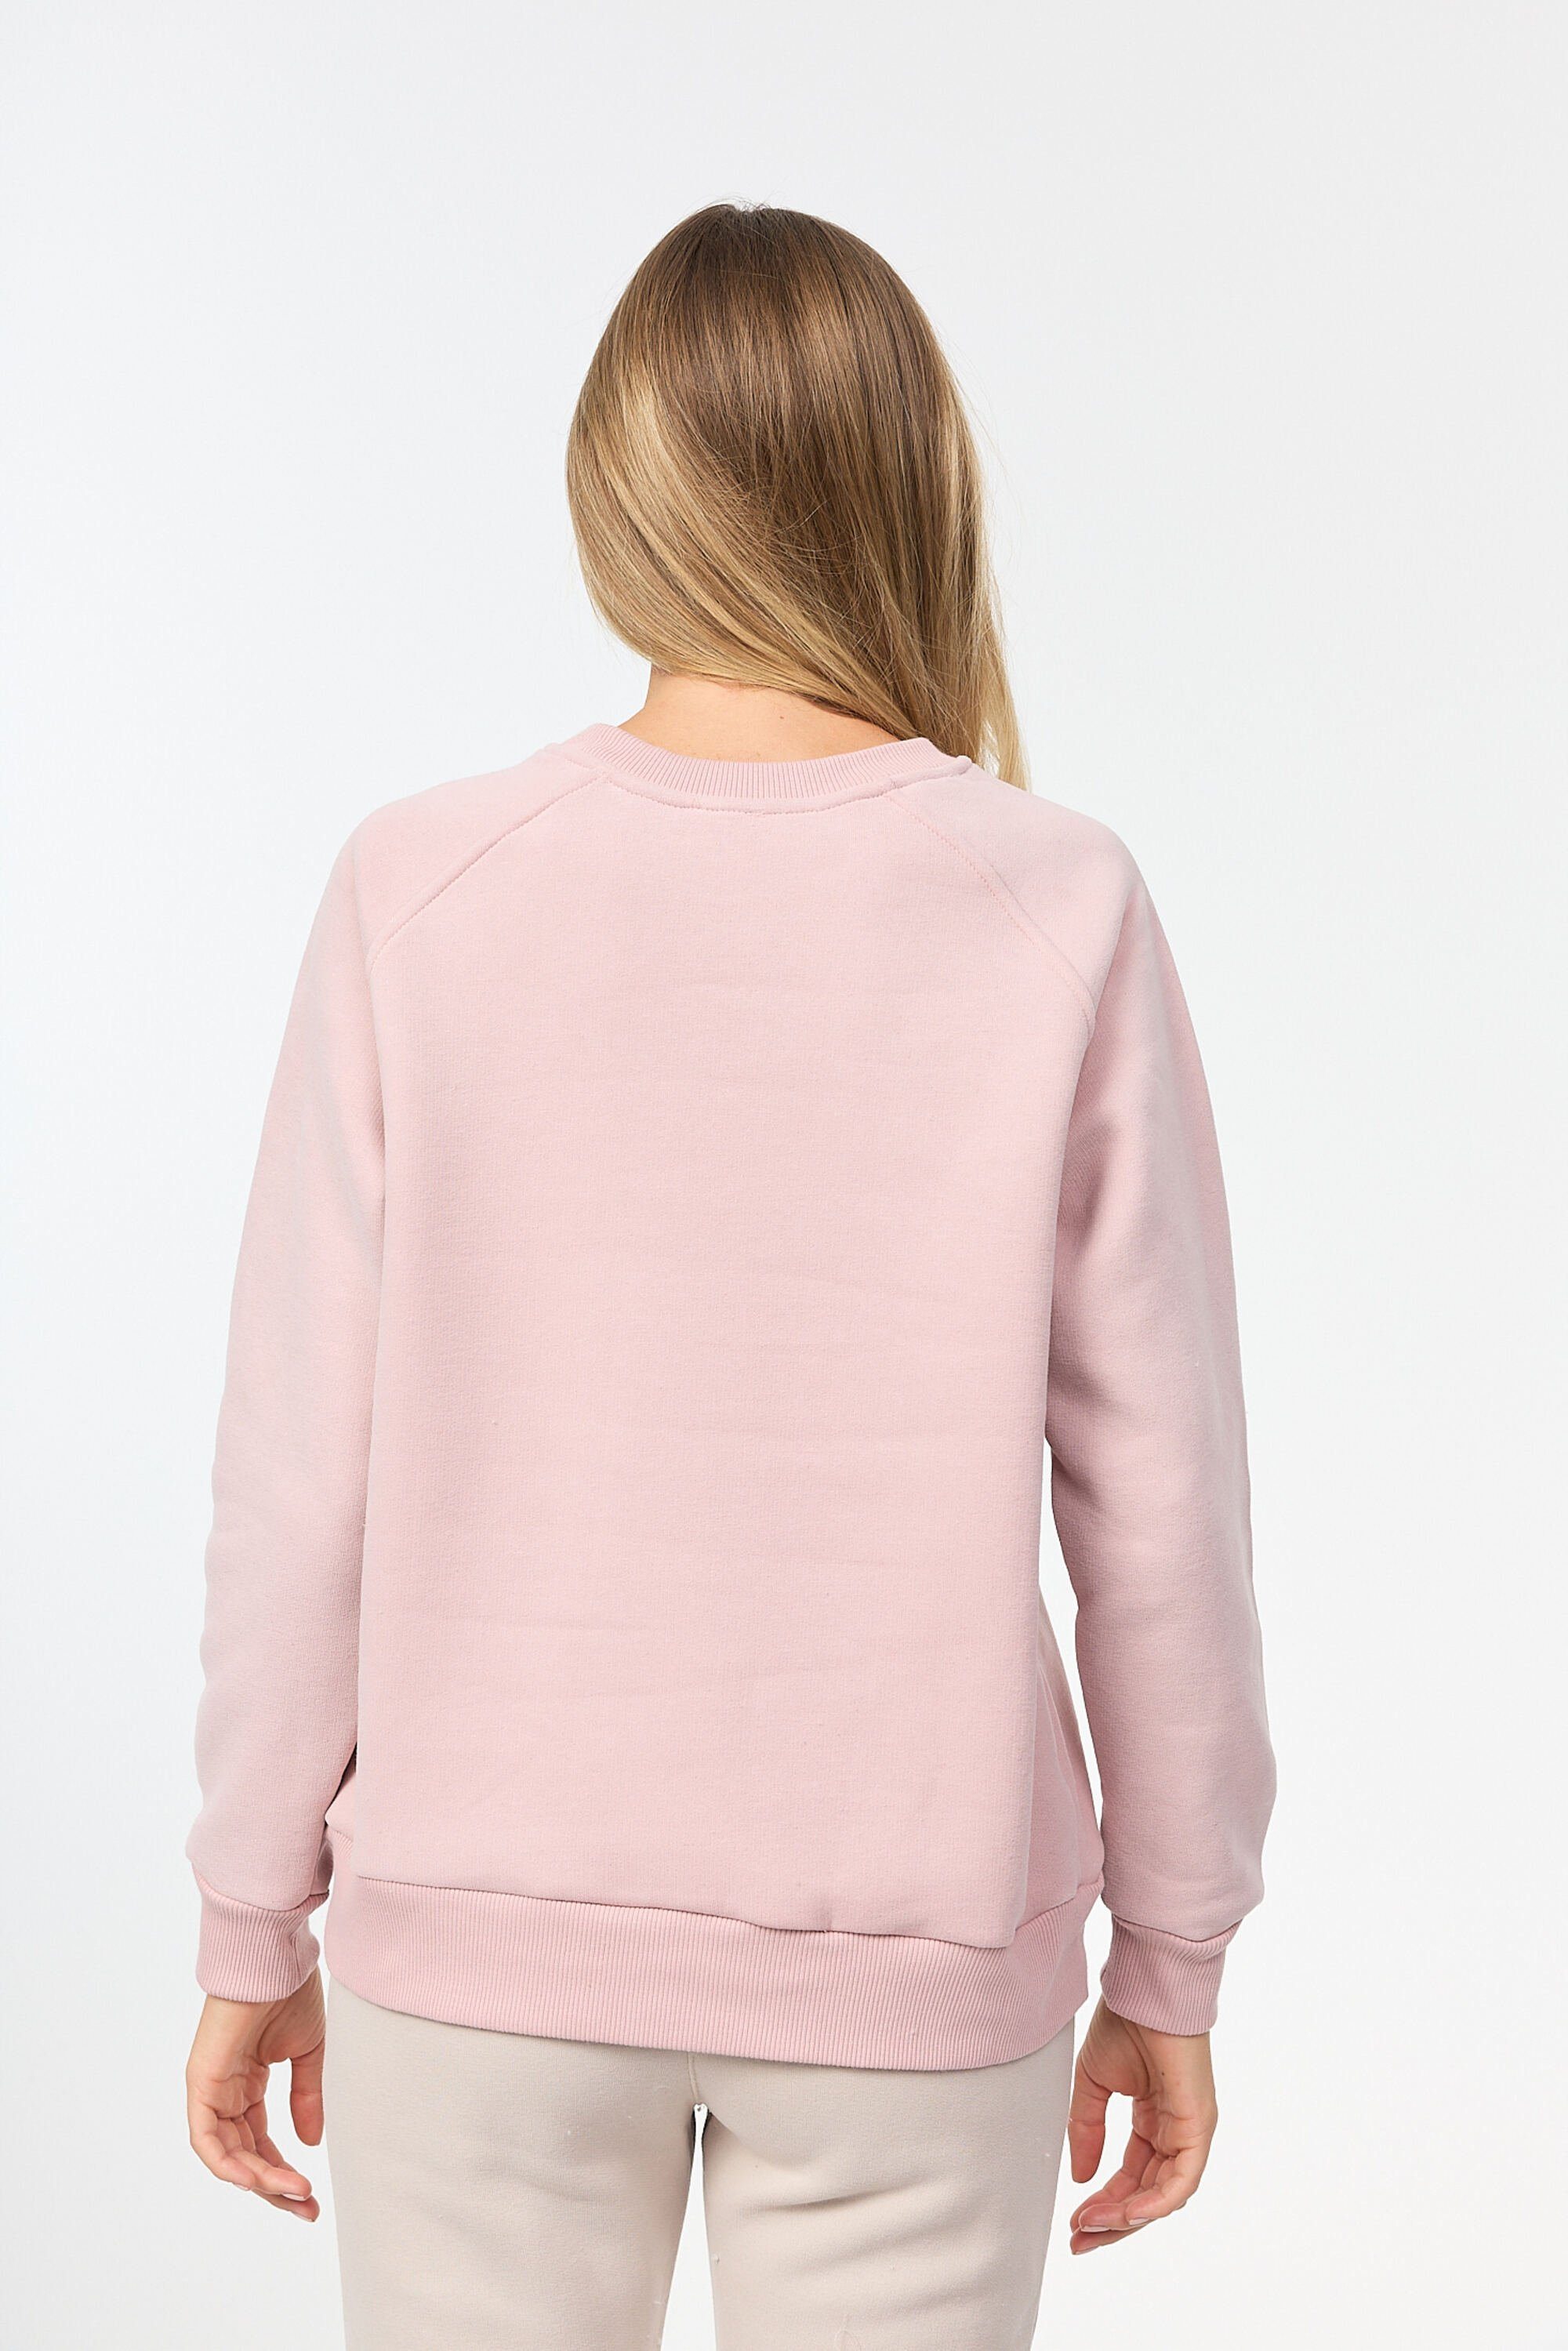 Decay mit Sweatshirt dezentem Frontprint rosa